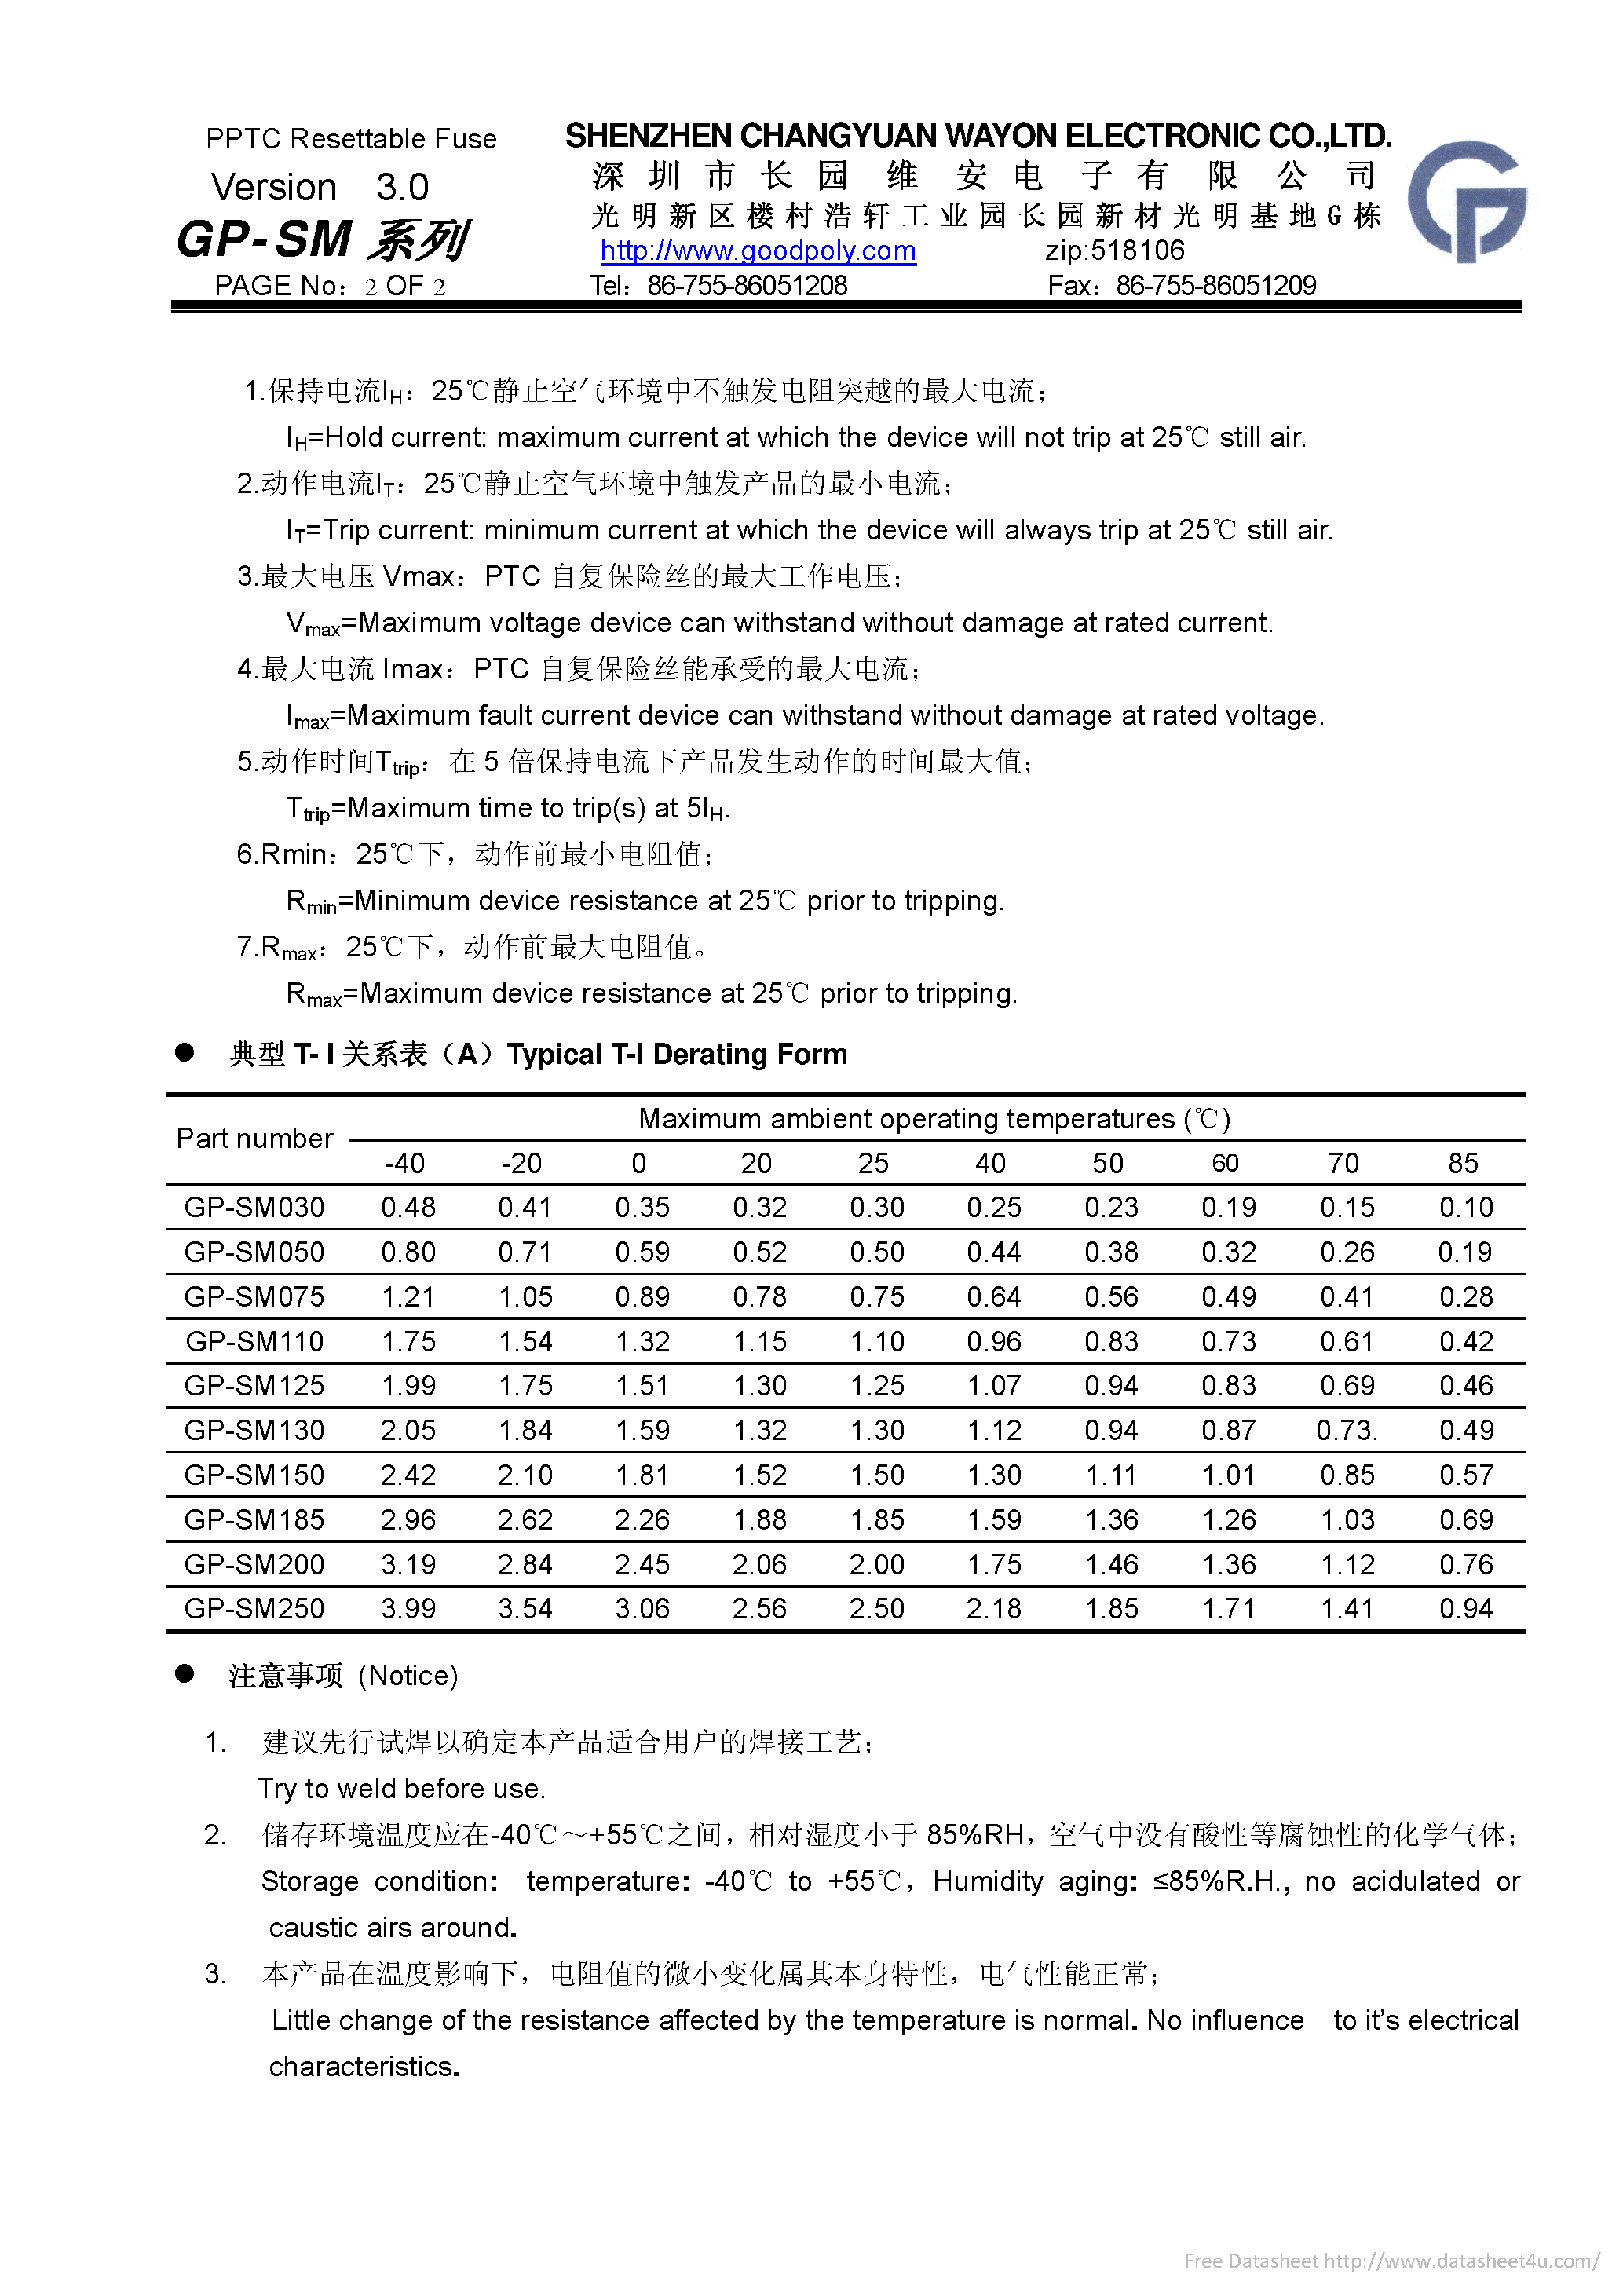 Datasheet GP-SM - page 2